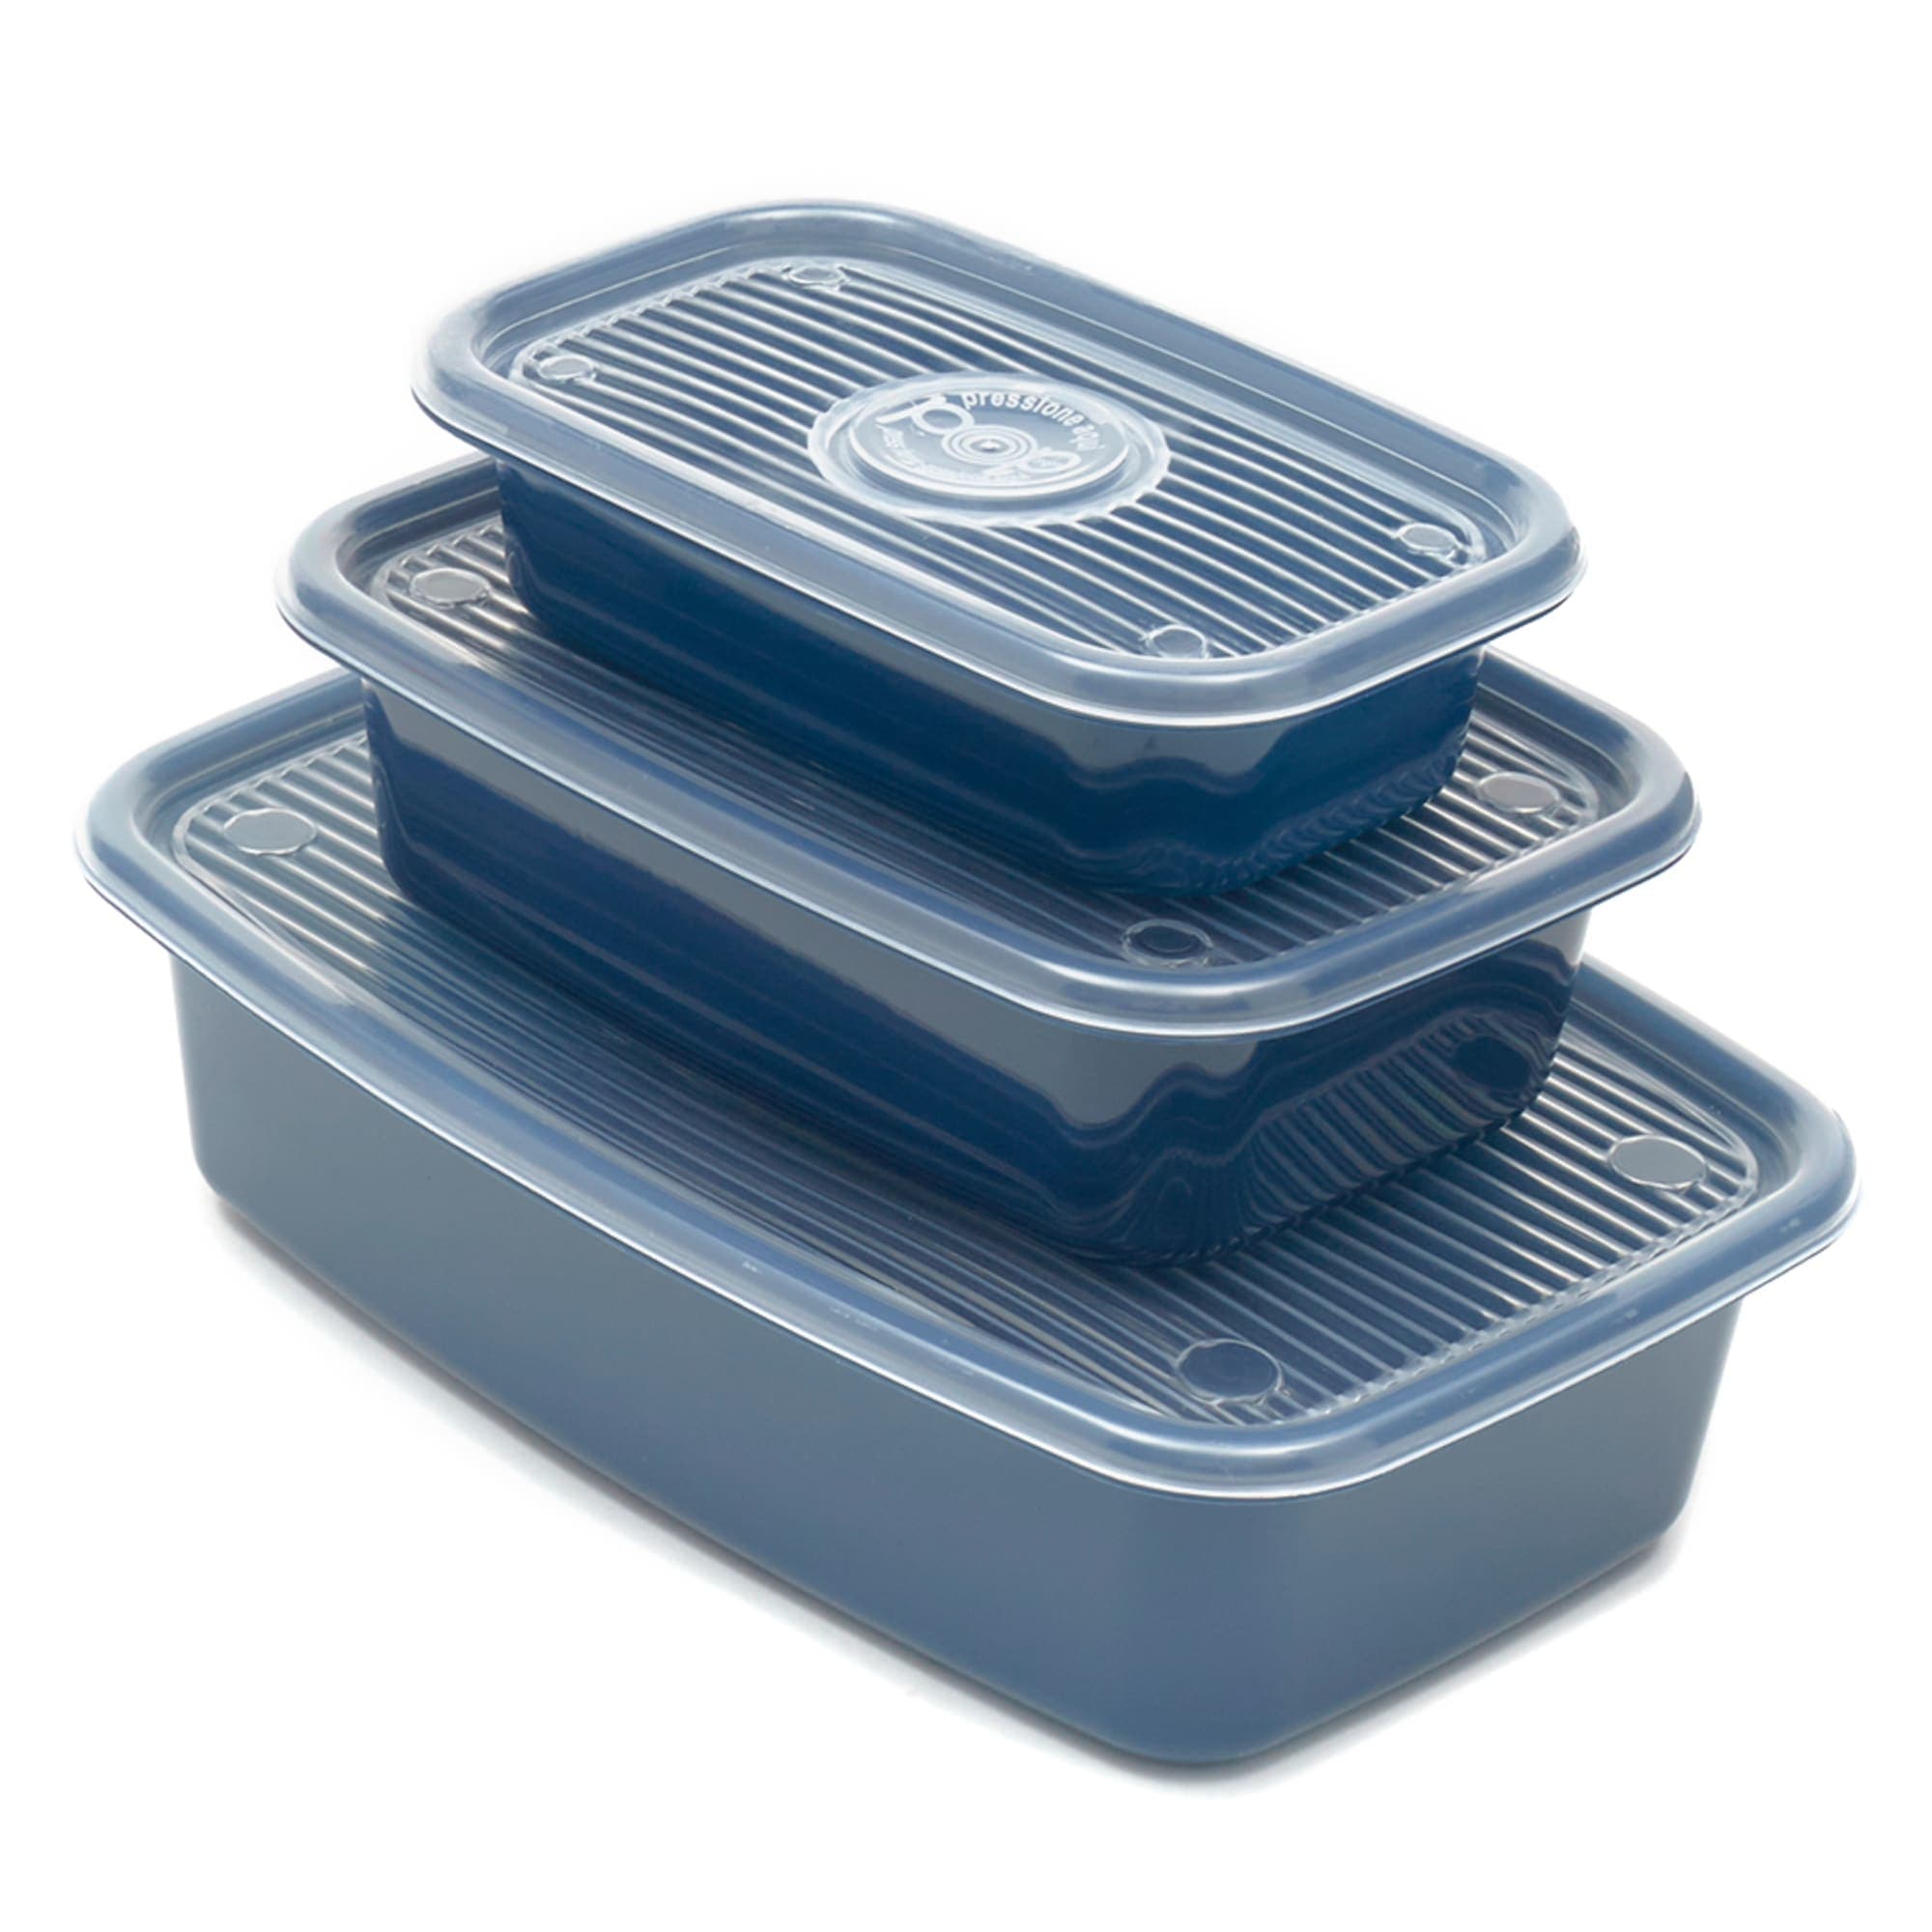 Home Basics 6 Piece Rectangular Plastic Meal Prep Set, Blue $6.00 EACH, CASE PACK OF 7